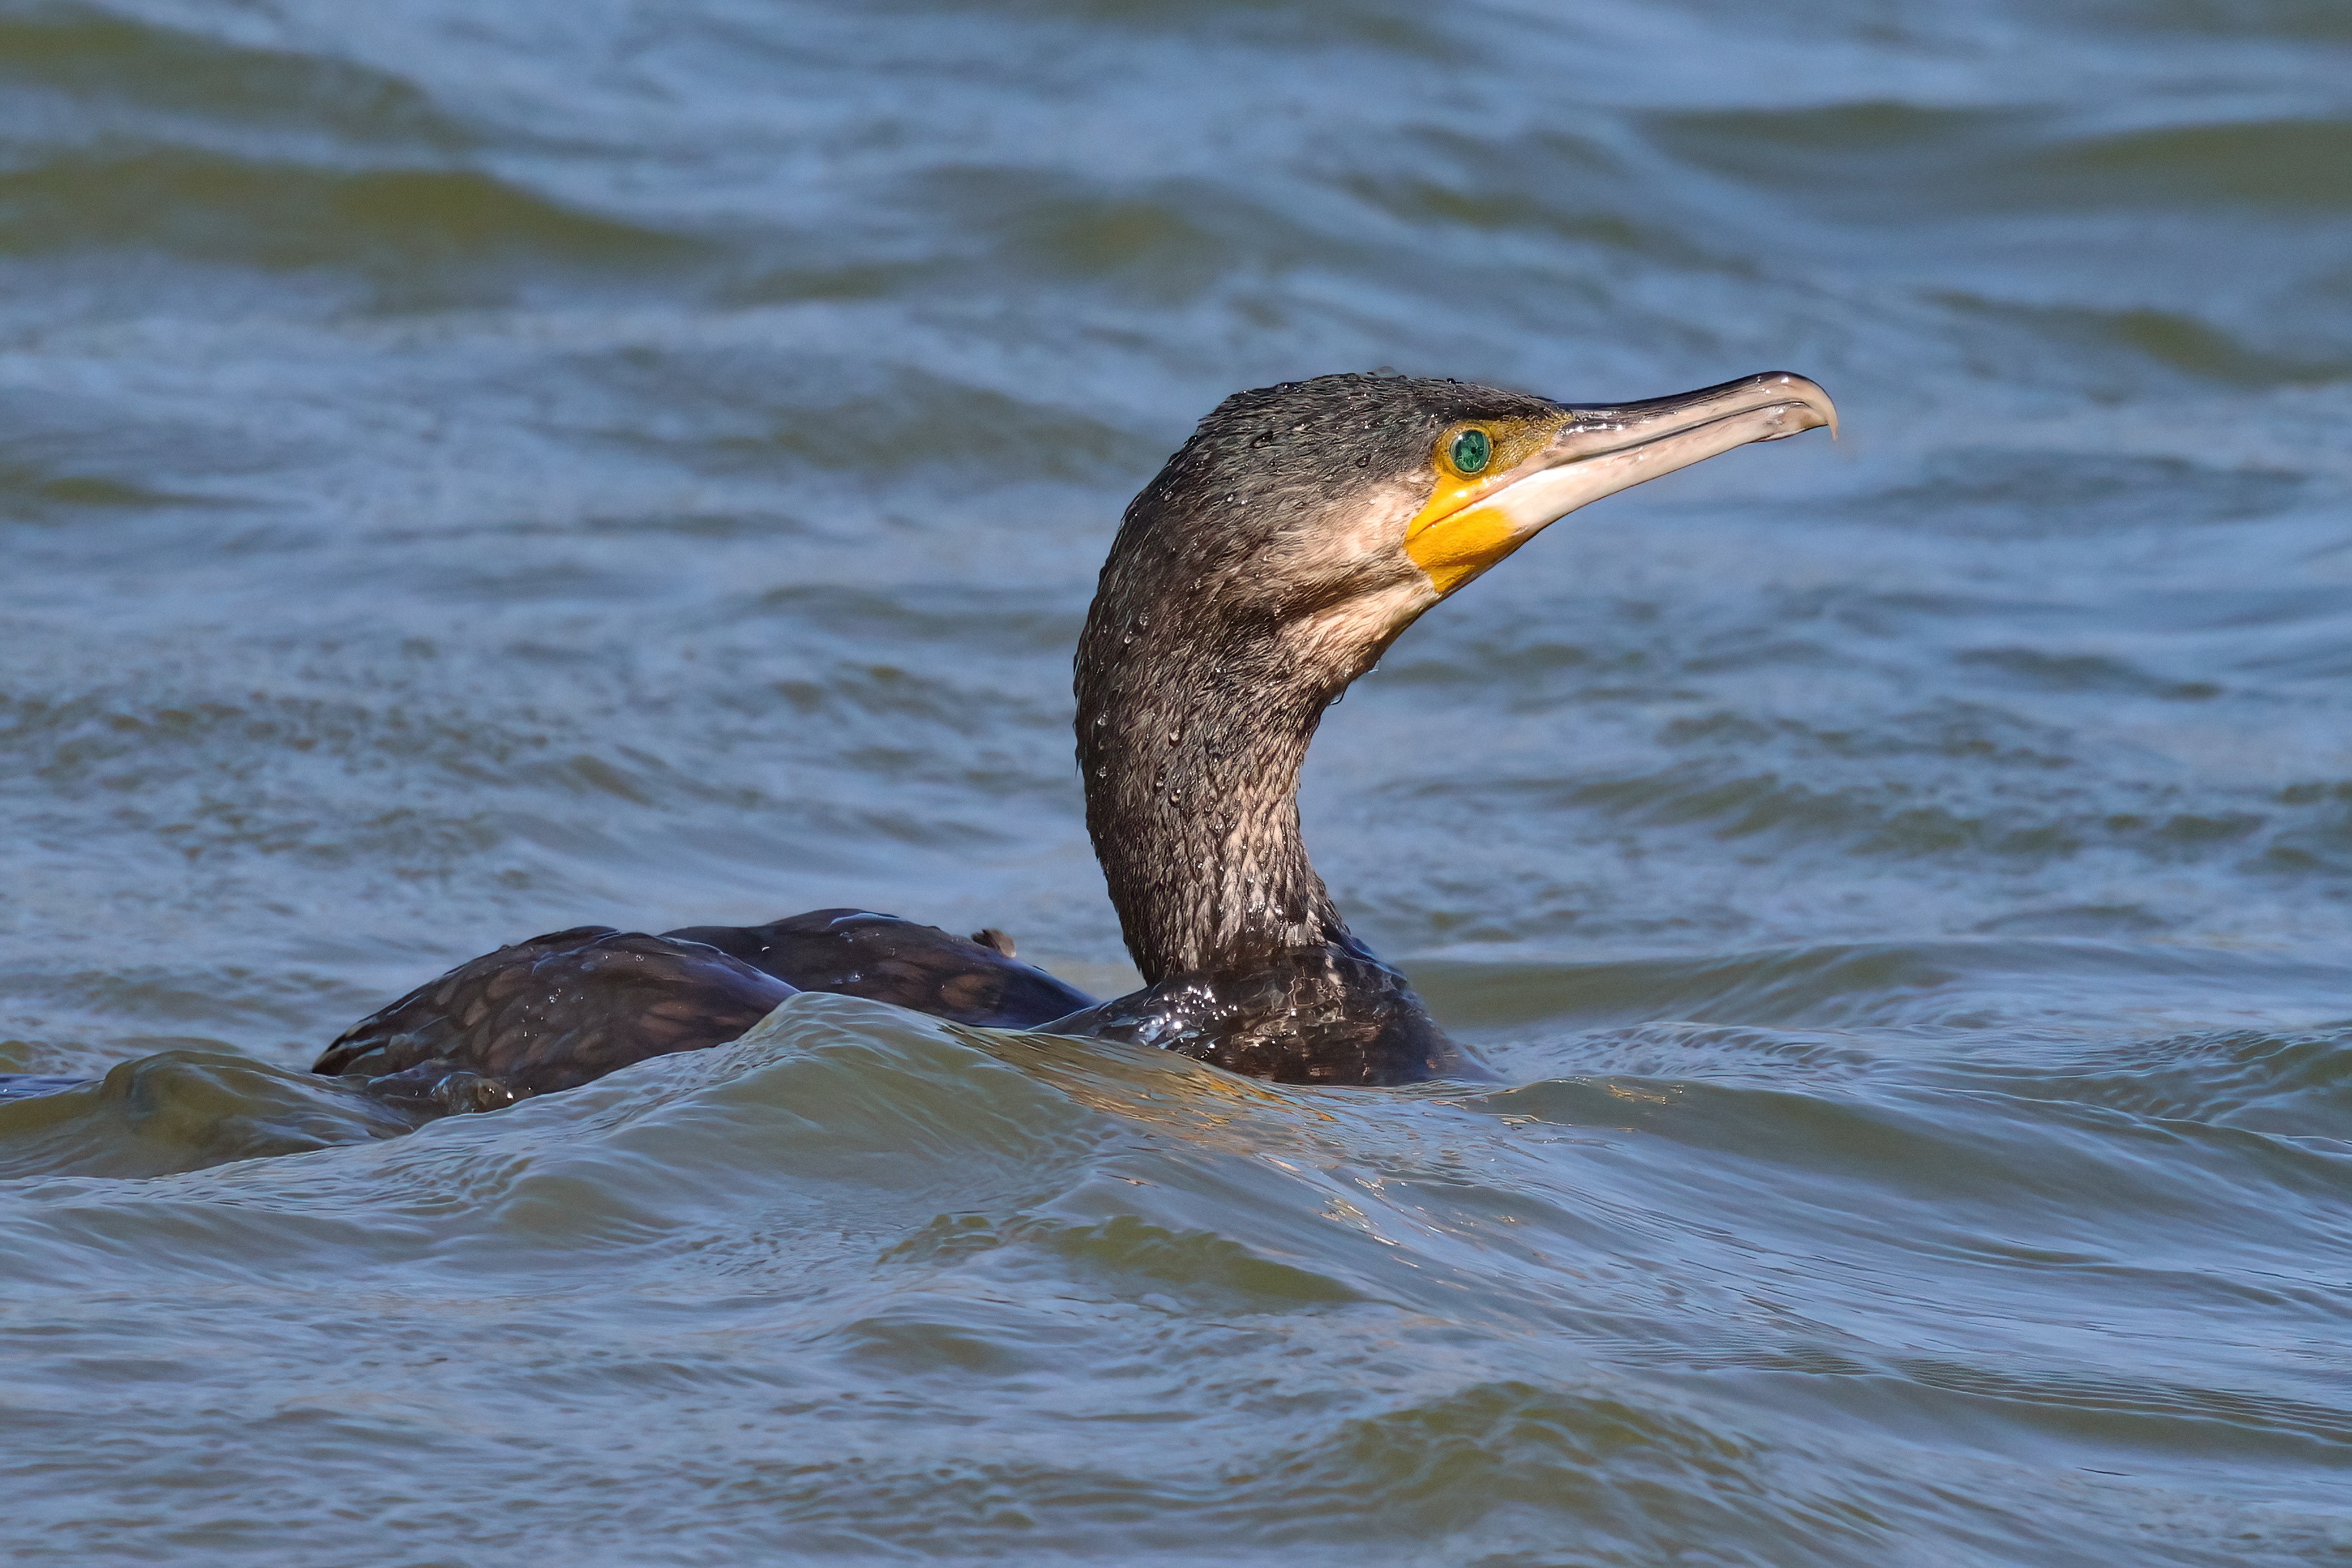 Cormorant - swimming